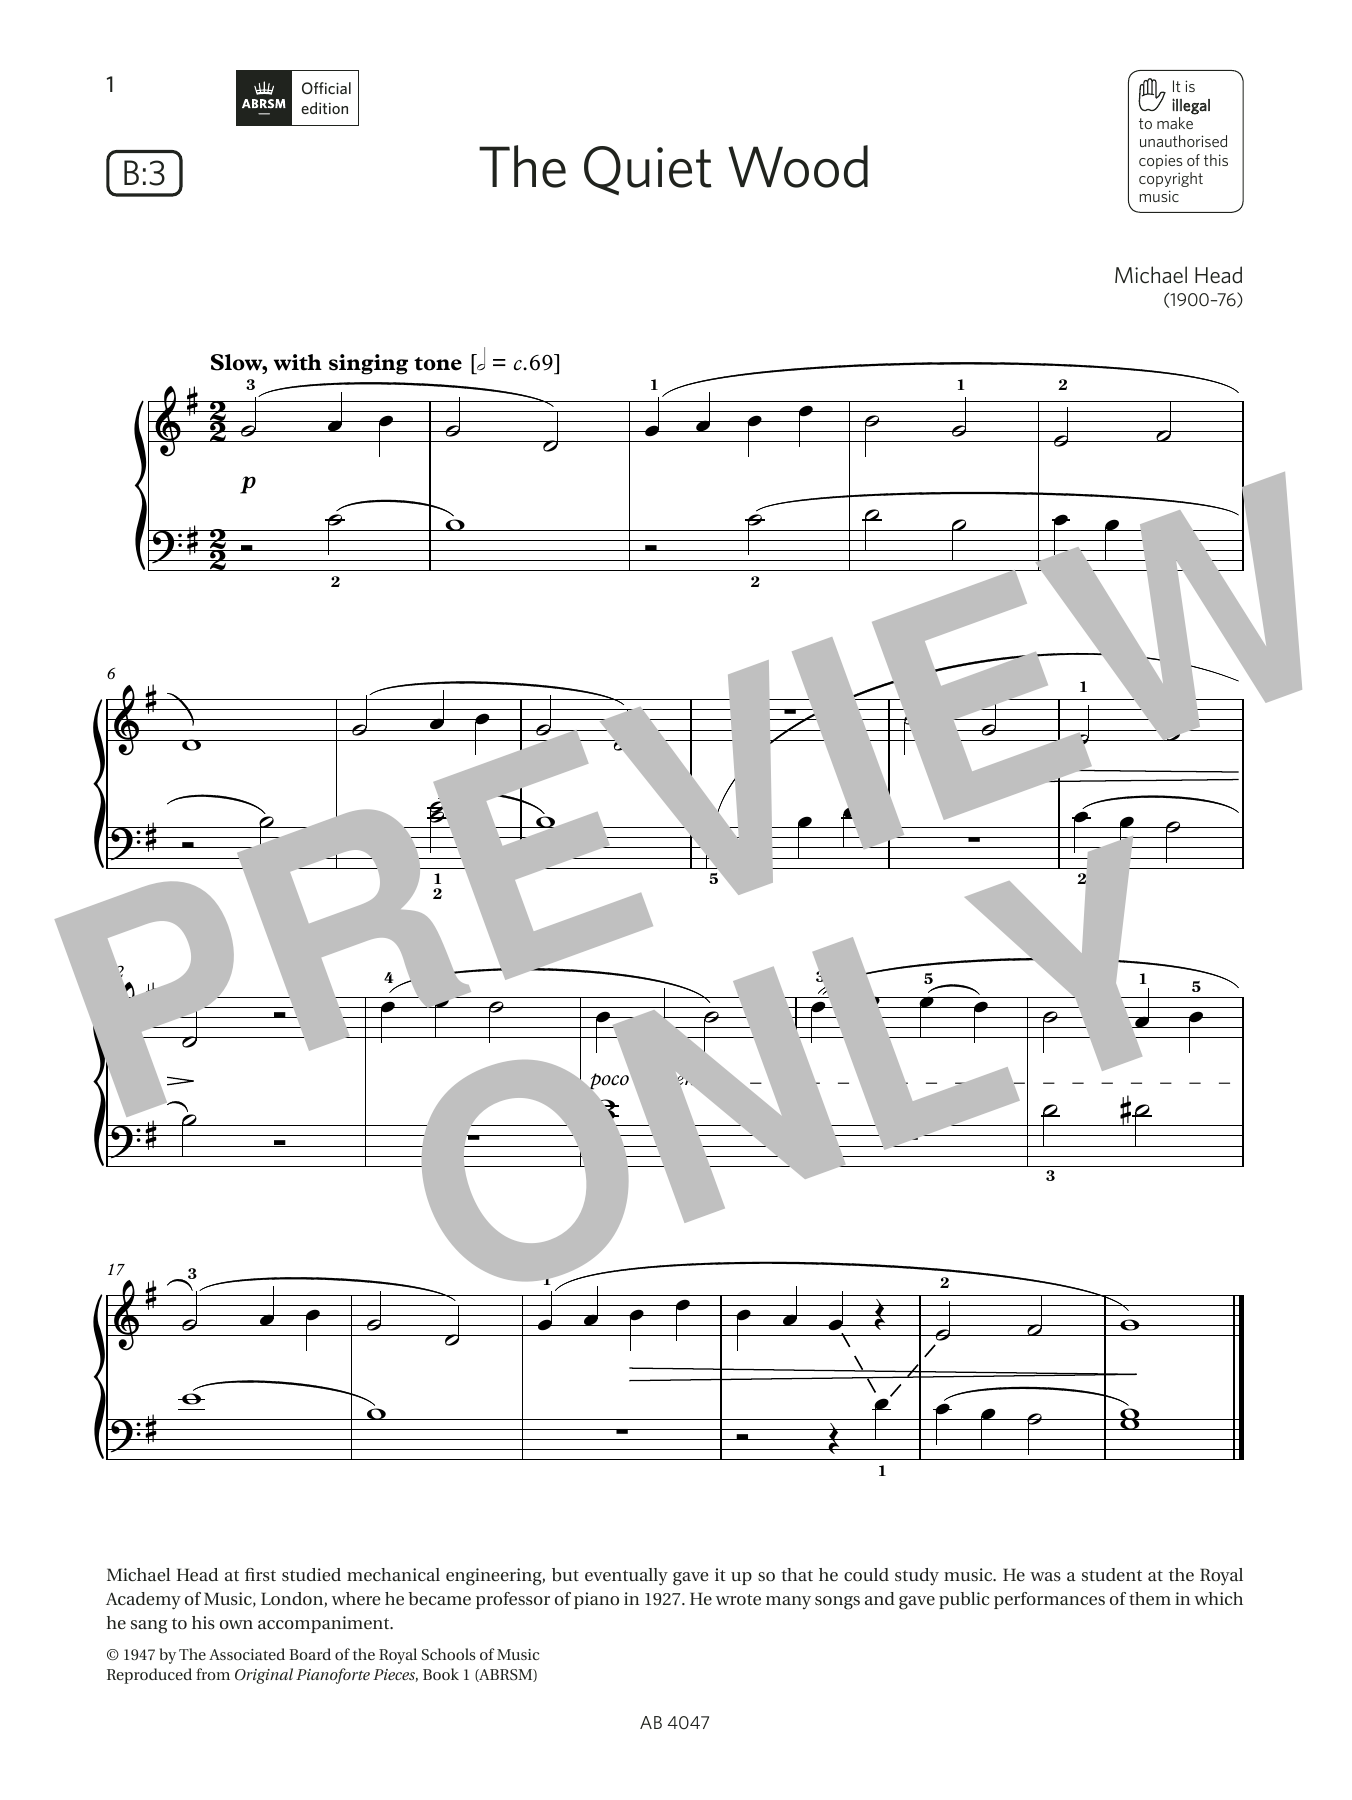 Download Michael Head The Quiet Wood (Grade 1, list B3, from Sheet Music